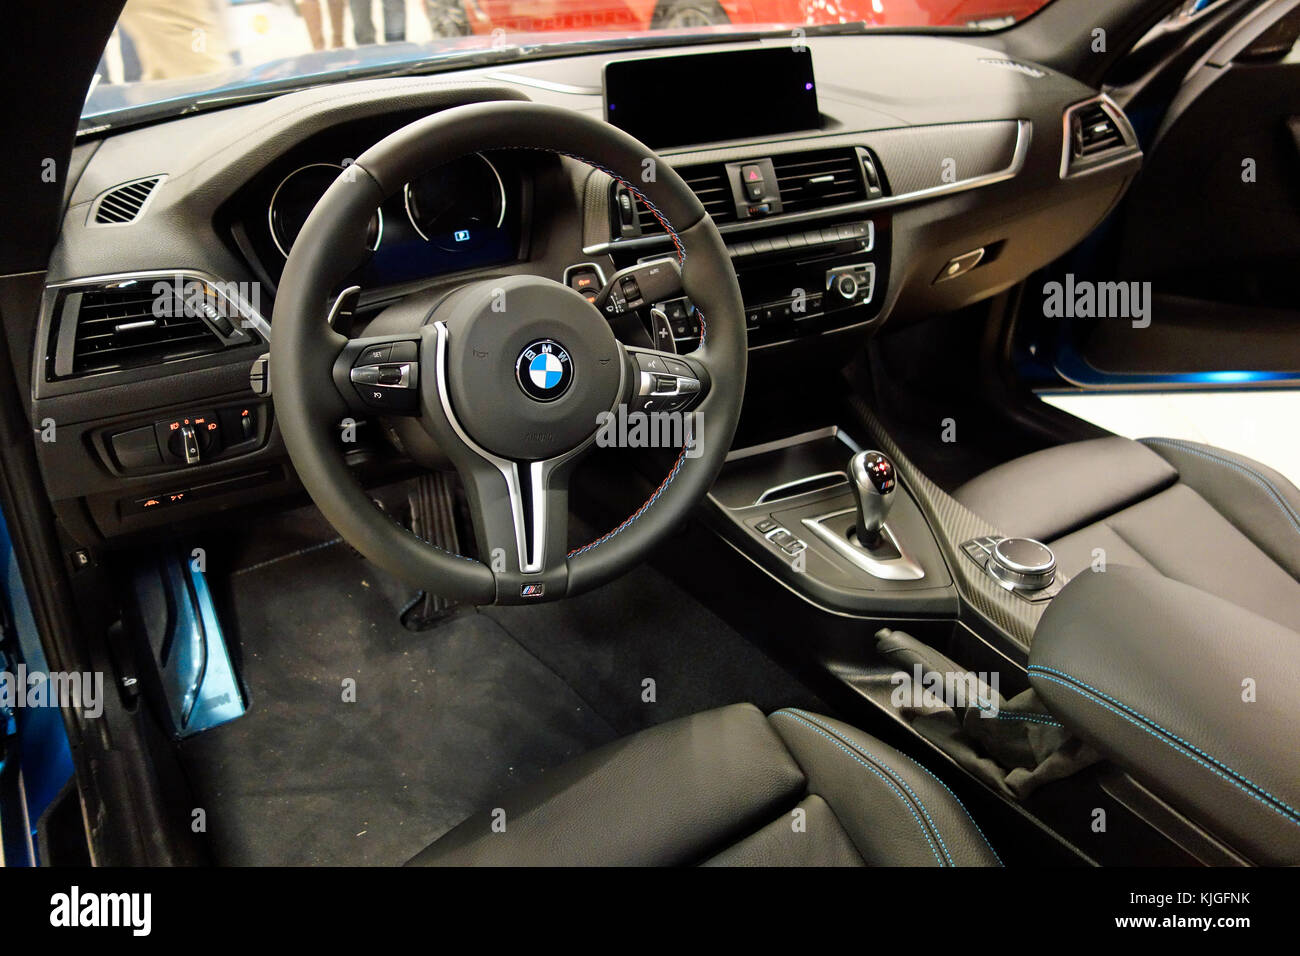 https://c8.alamy.com/comp/KJGFNK/the-steering-wheel-dash-and-interior-of-a-2018-bmw-m2-automobile-KJGFNK.jpg